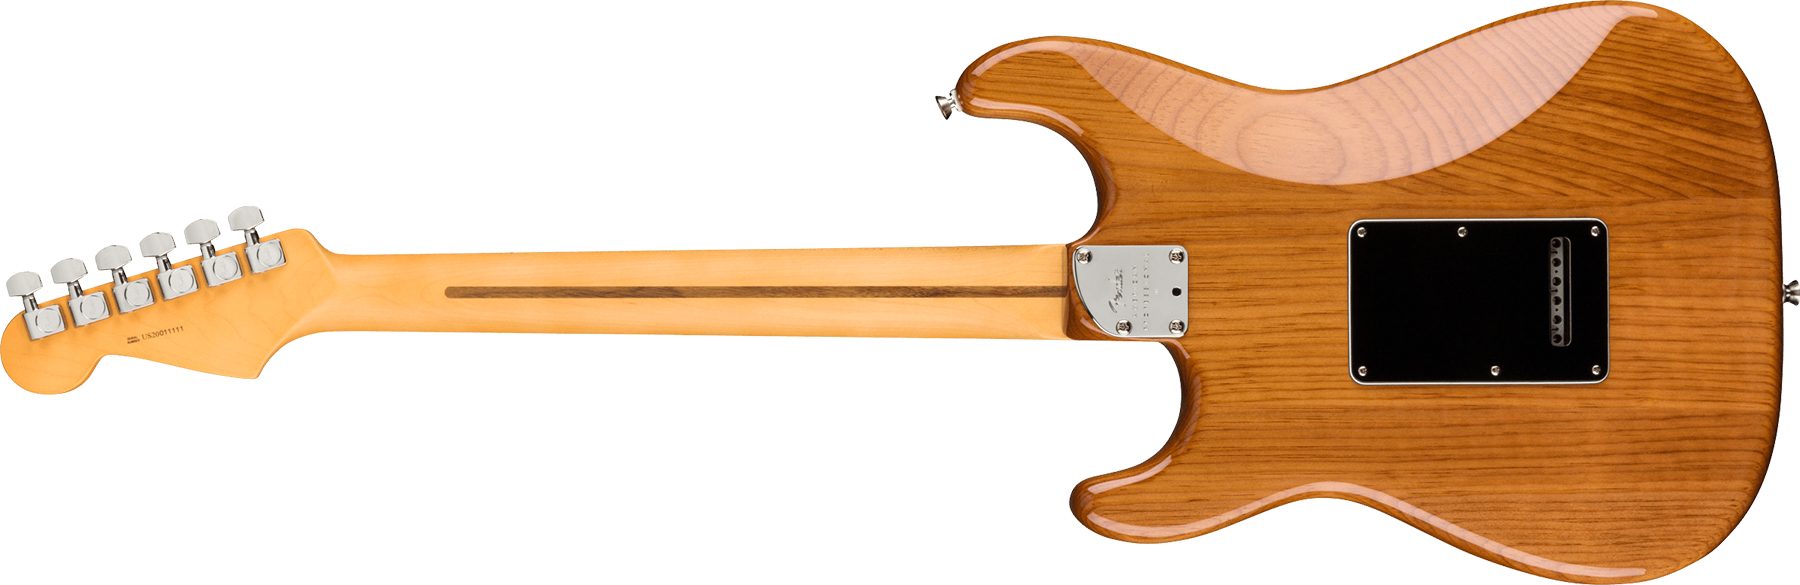 Fender Strat American Professional Ii Usa Mn - Roasted Pine - Guitare Électrique Forme Str - Variation 1